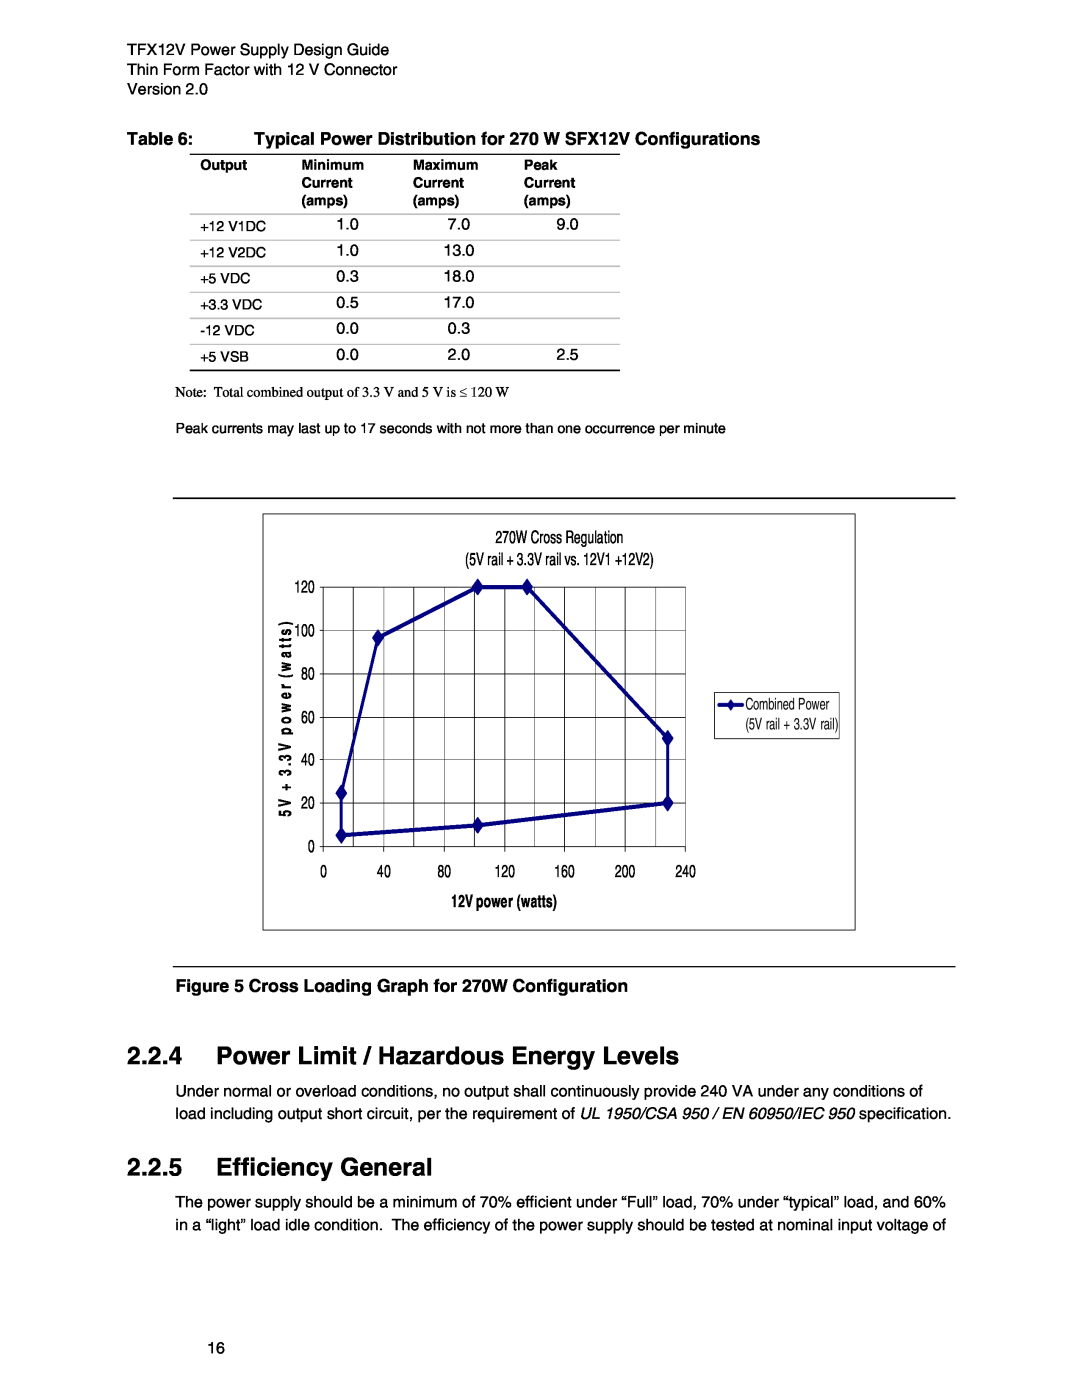 Intel TFX12V manual Power Limit / Hazardous Energy Levels, Efficiency General, Cross Loading Graph for 270W Configuration 